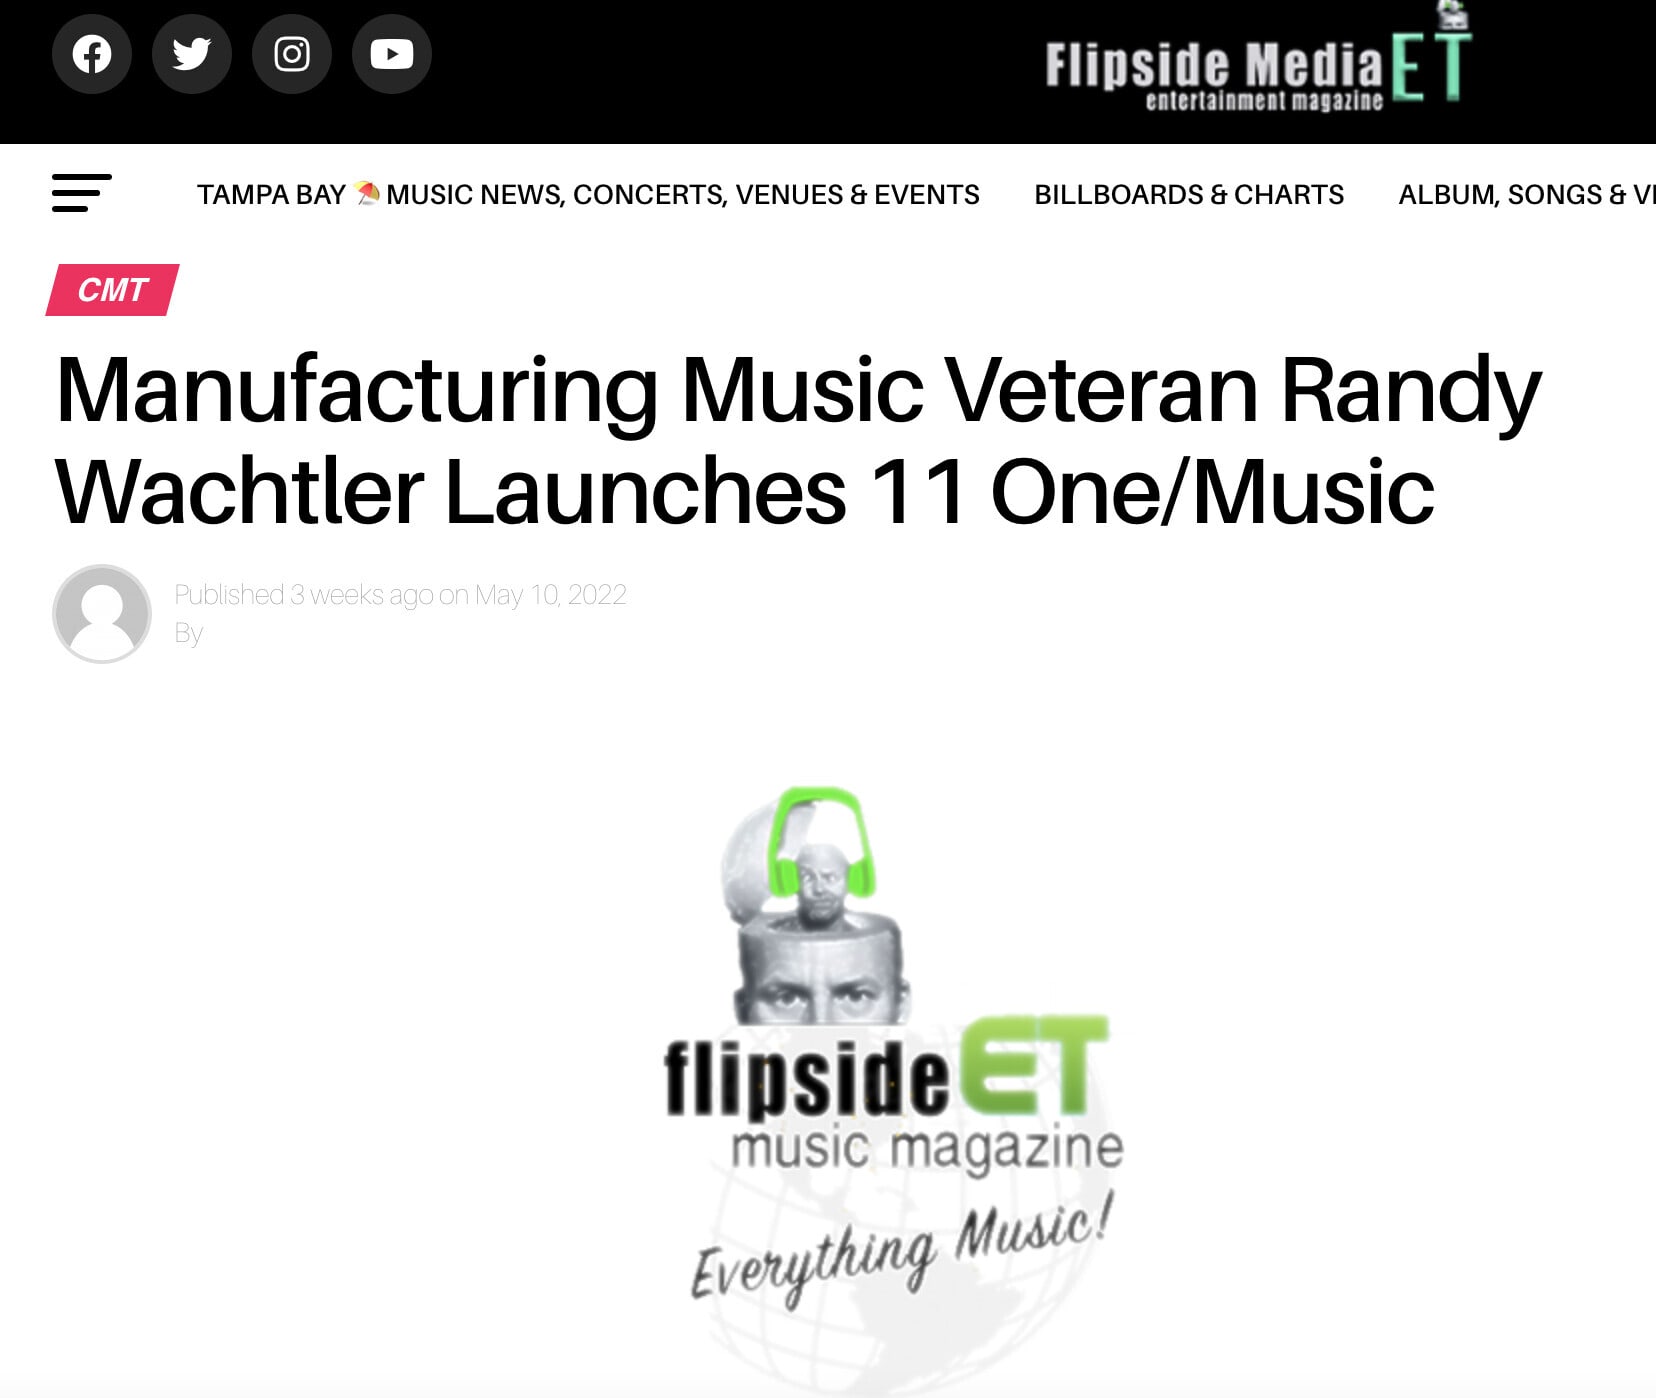 Flipside Media entertainment magazine&#39;s feature on 11 One/Music